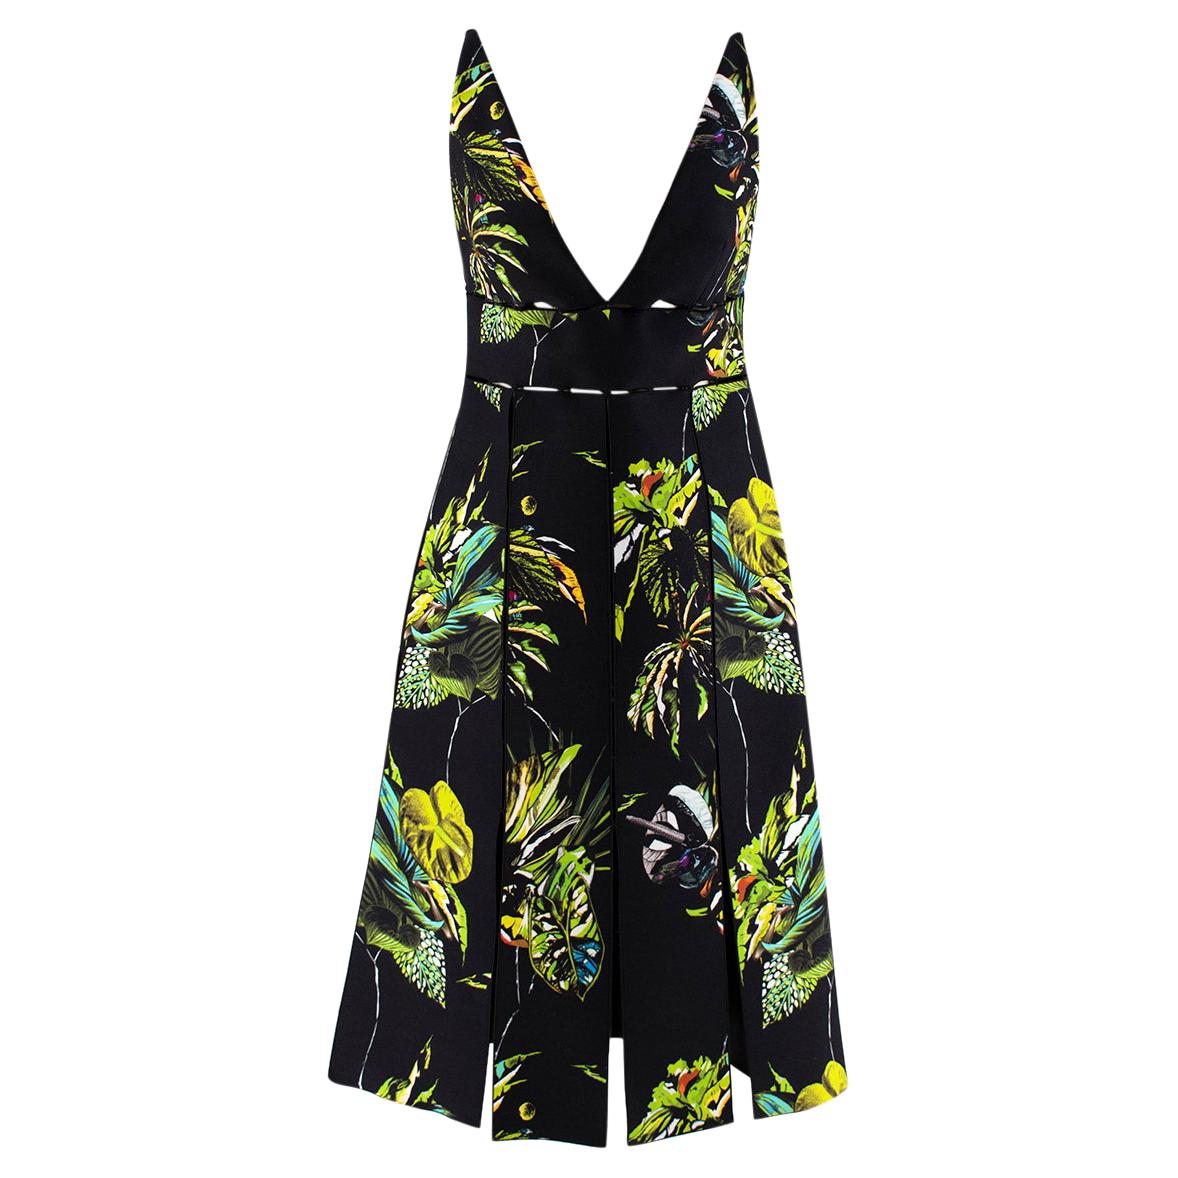 Proenza Schouler Black Tropical Print Cut-Out Dress - US size 4